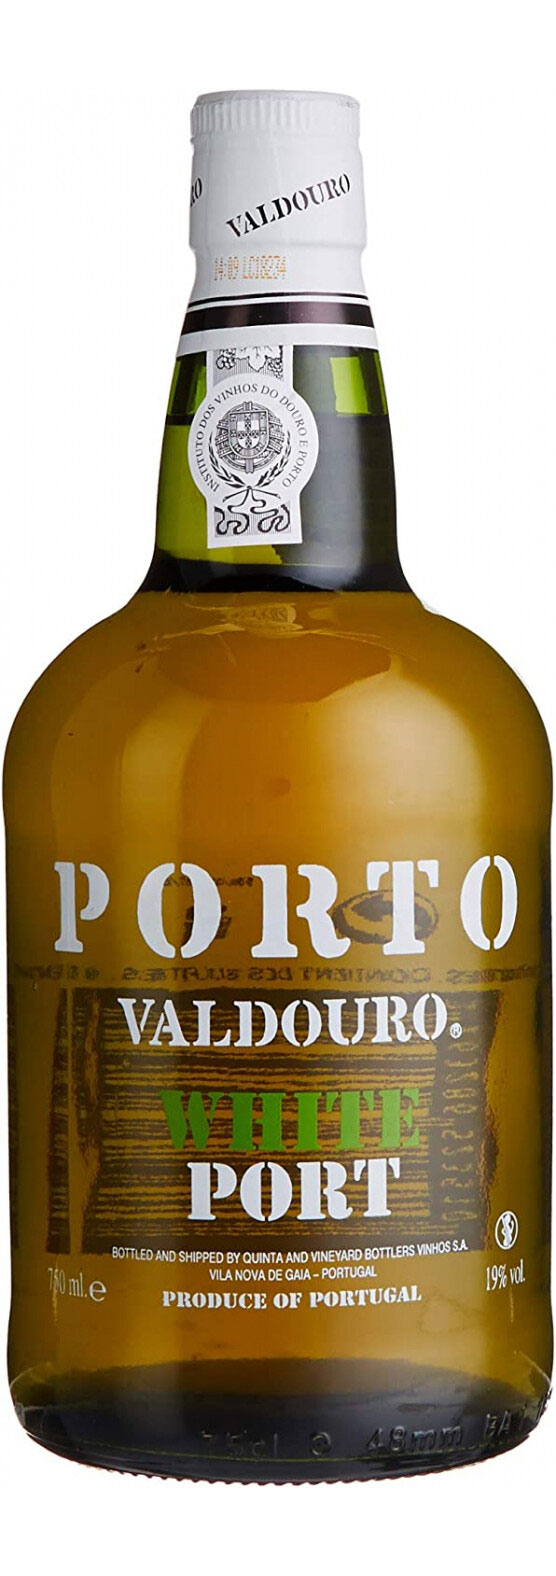 Valdouto - Porto Tawny White - Compania de Vinos Montenegro